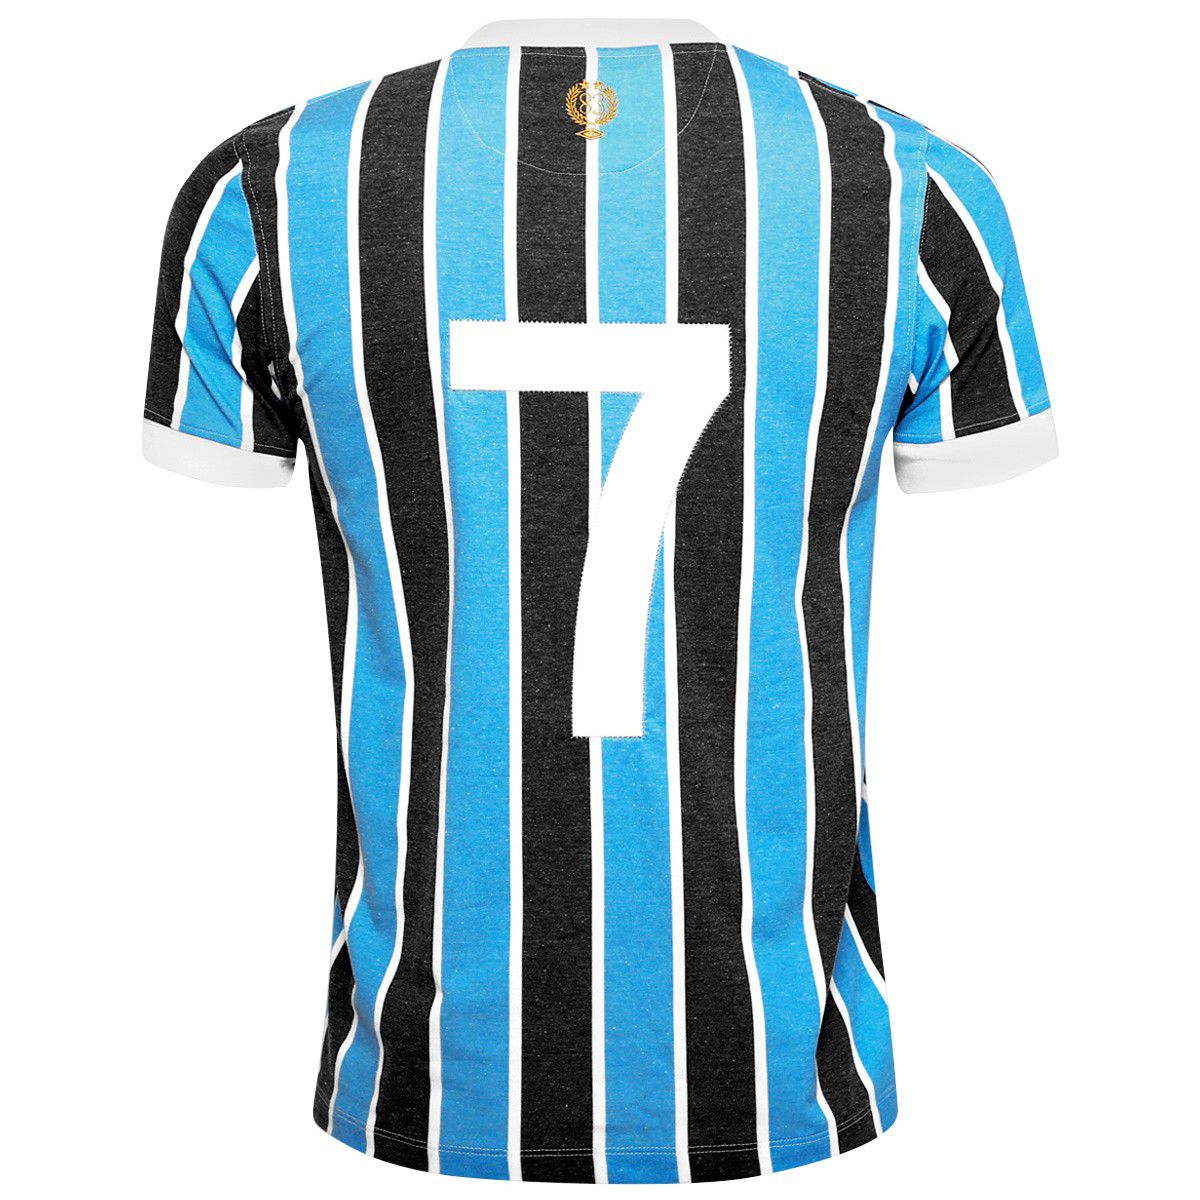 Camisa Umbro Grêmio Retrô 1983